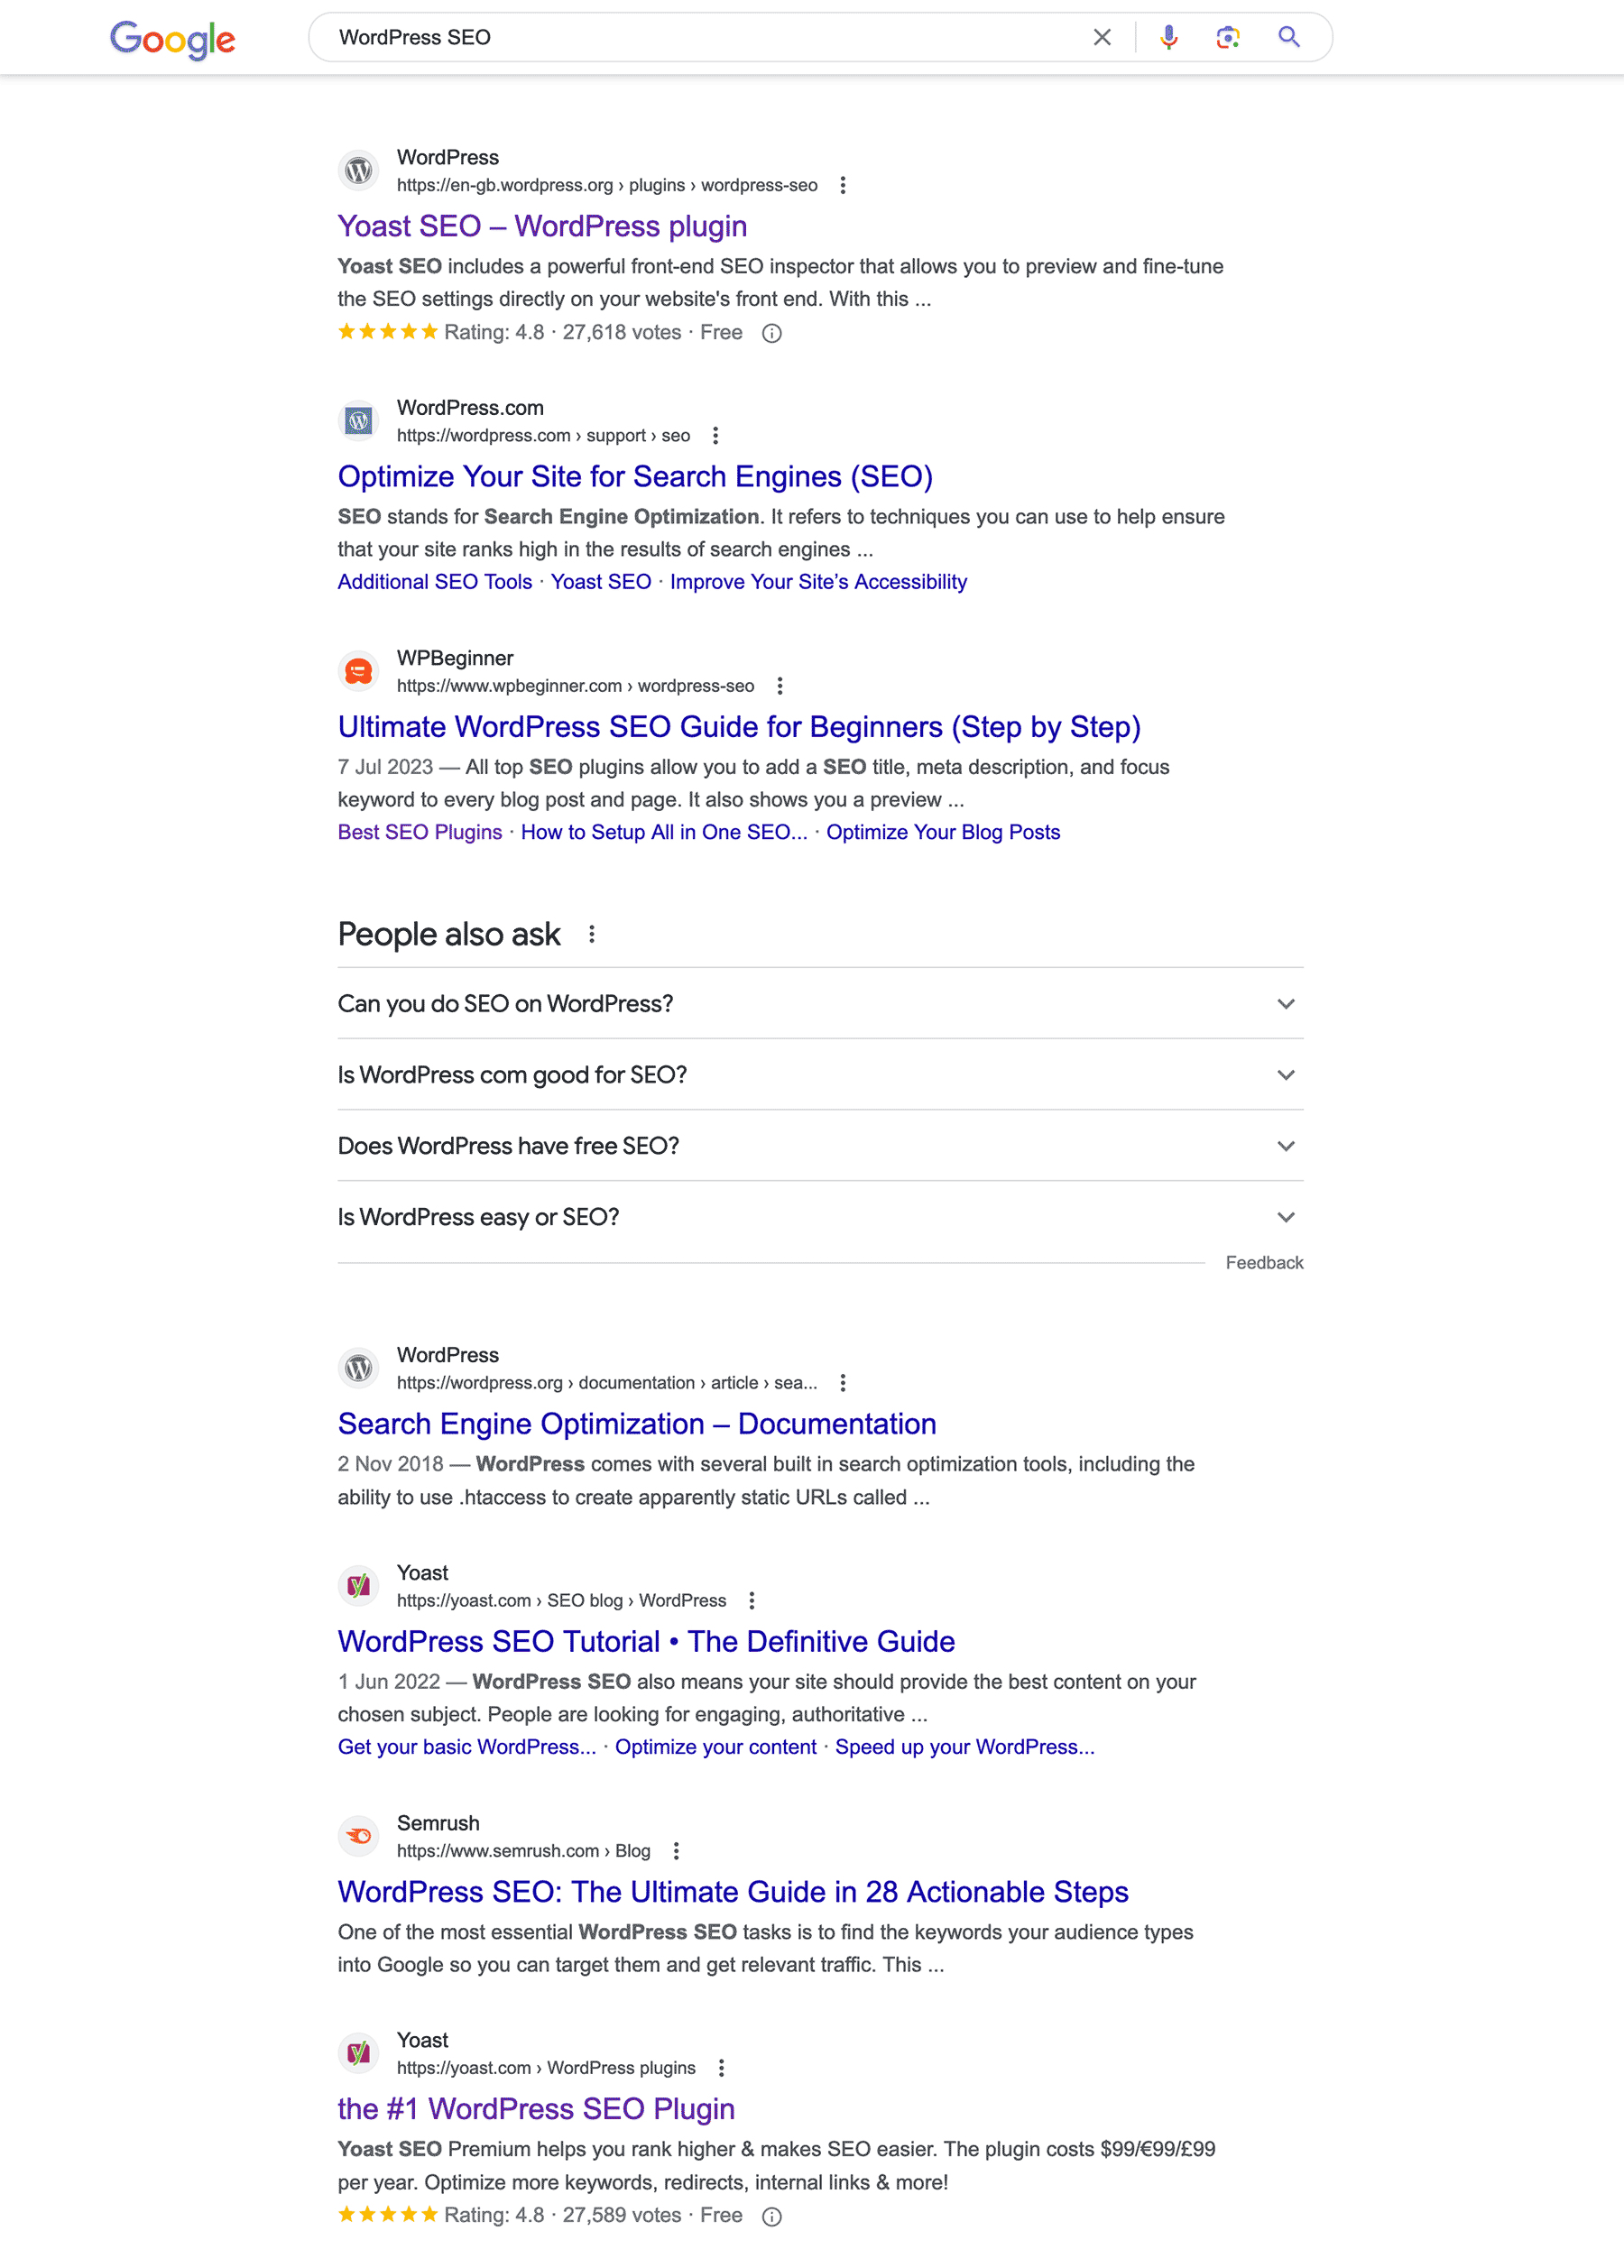 Google SEO Search Result